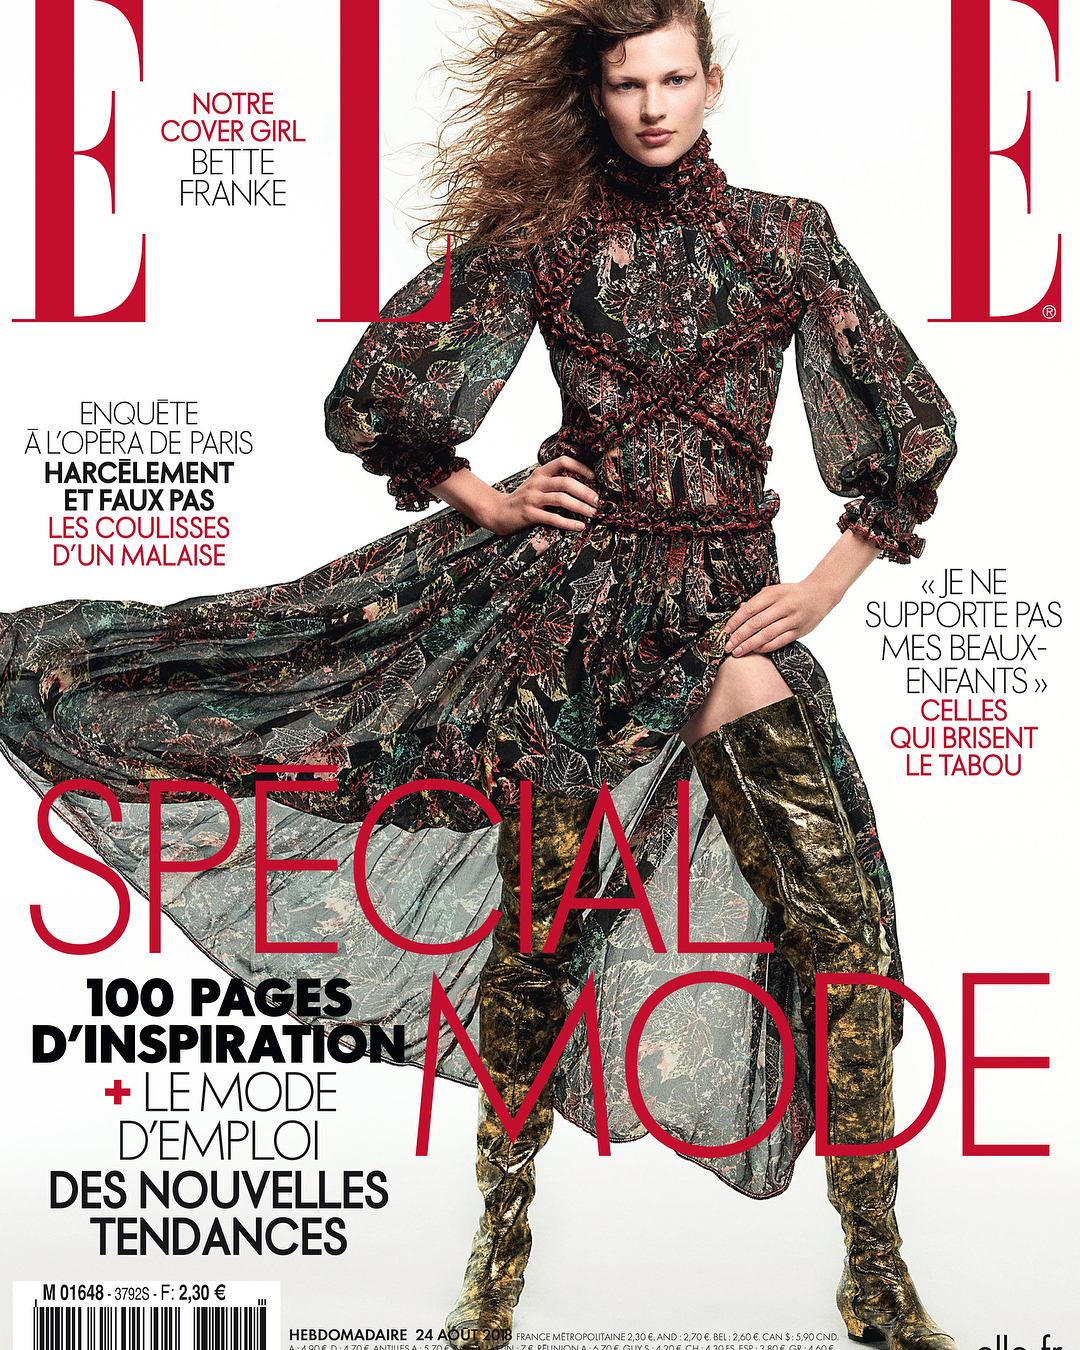 Elle France August-September 2018 Cover Story Editorial